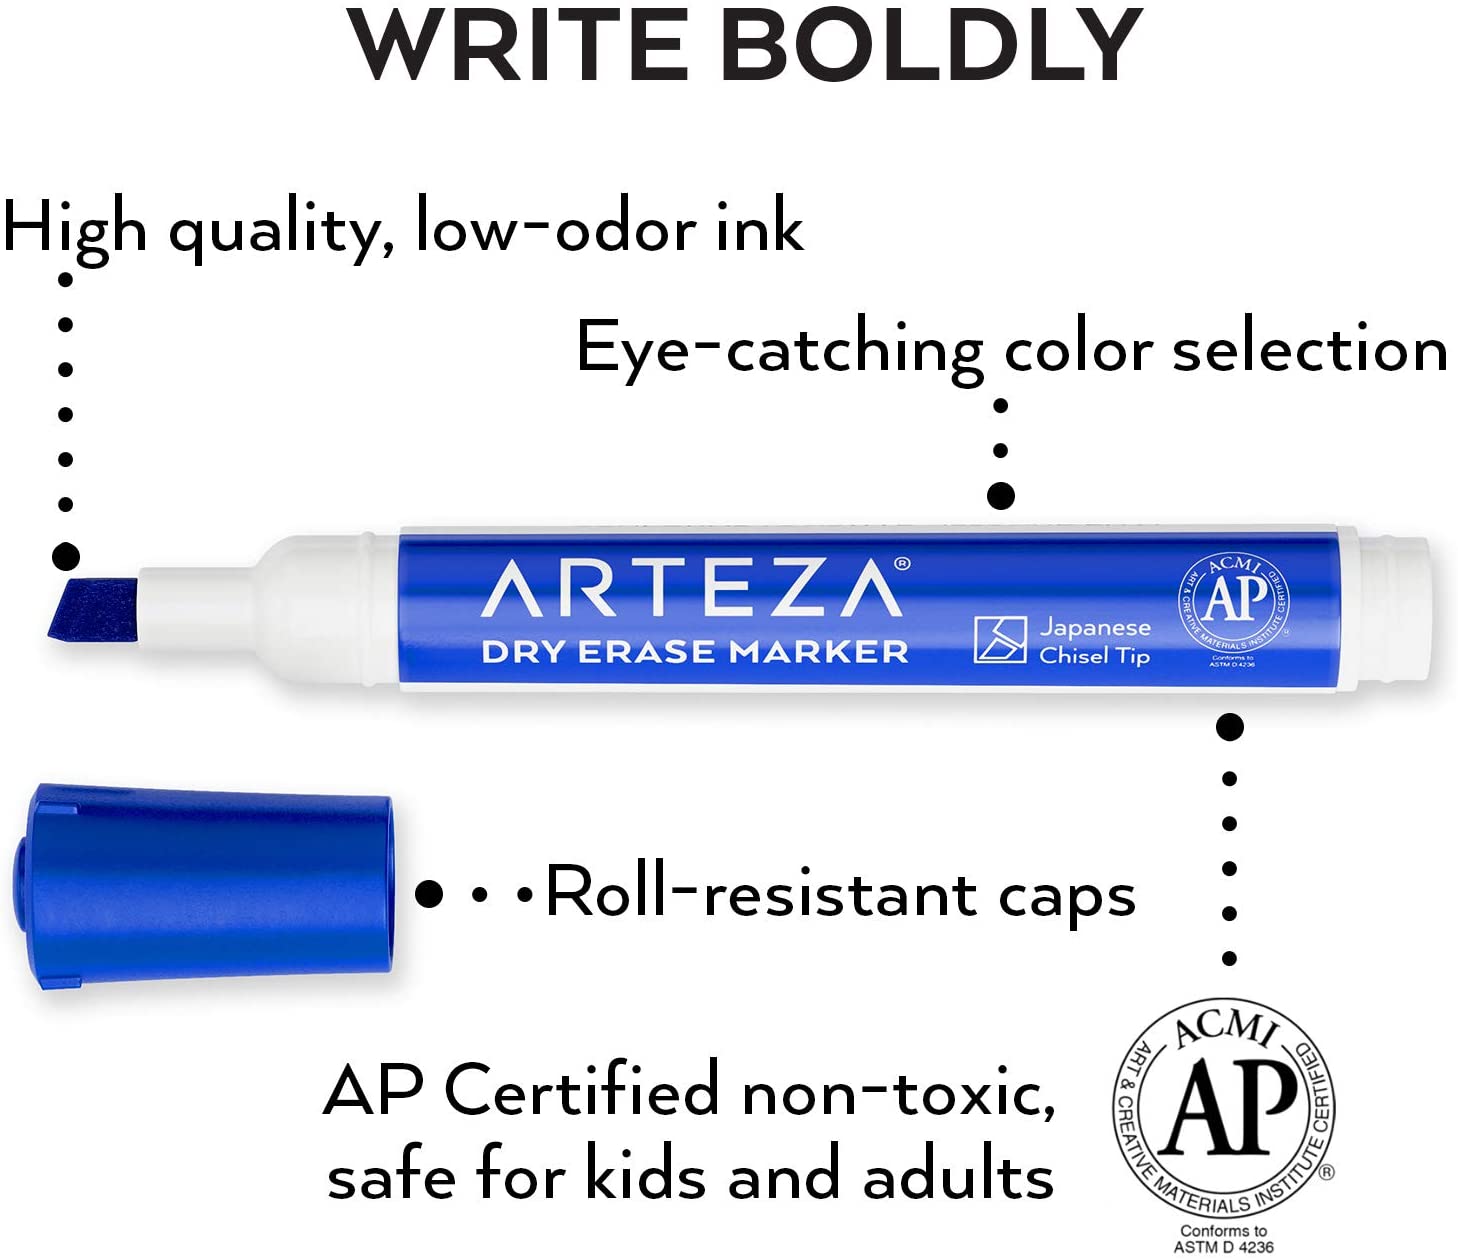 Arteza ARTZ-8416 ARTEZA Fine Tip Dry Erase Markers with Eraser